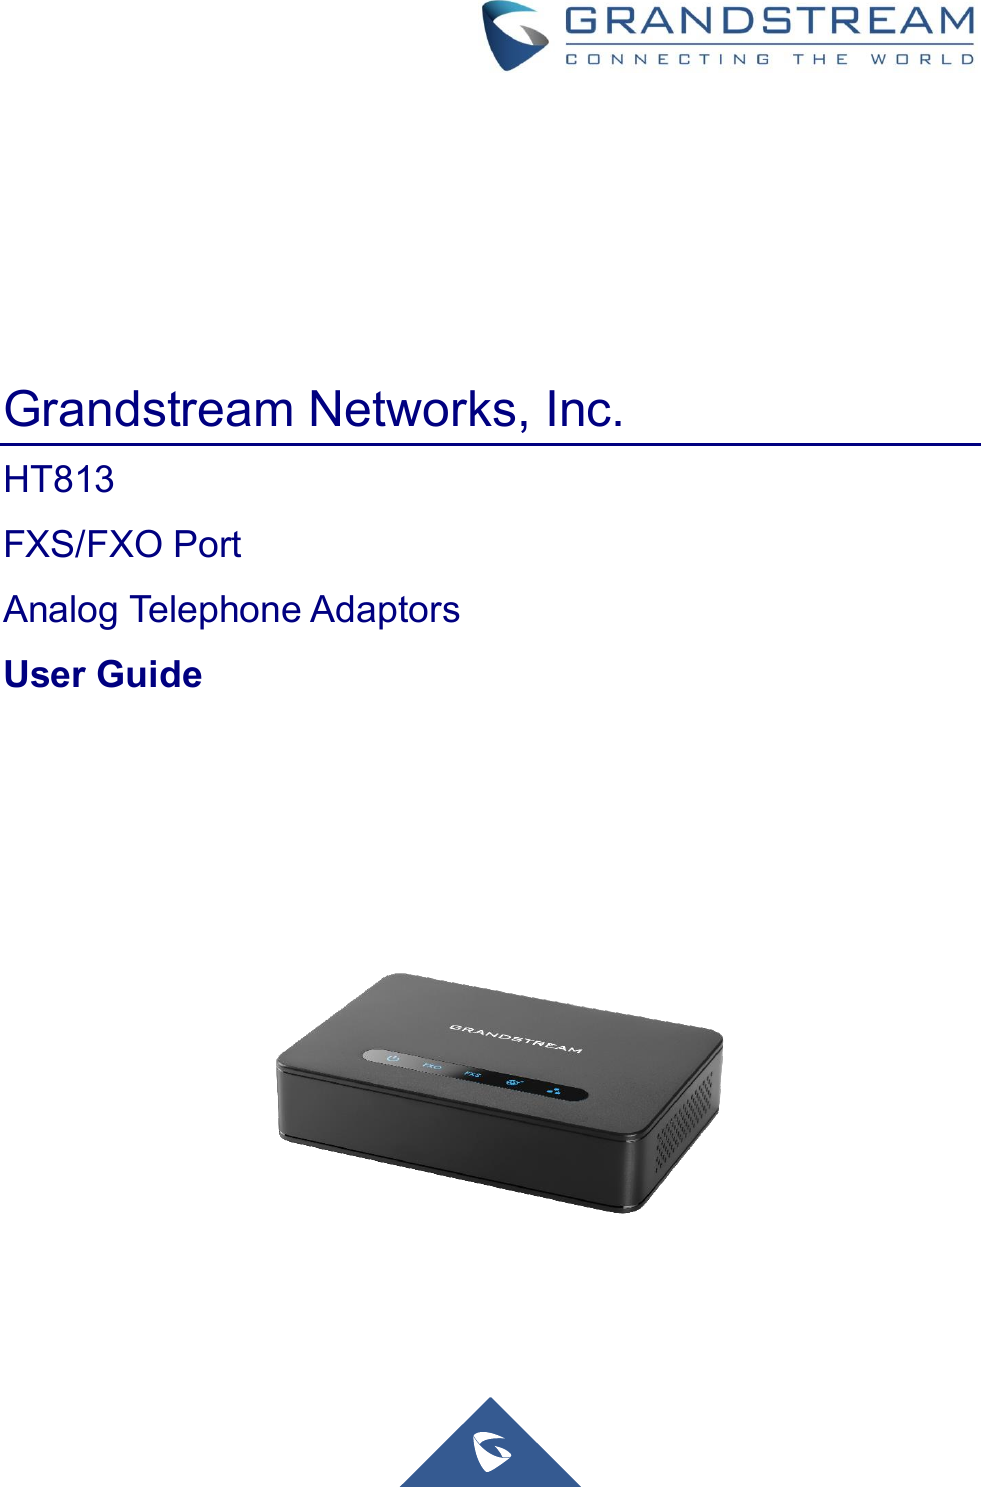                    Grandstream Networks, Inc. HT813   FXS/FXO Port Analog Telephone Adaptors User Guide              